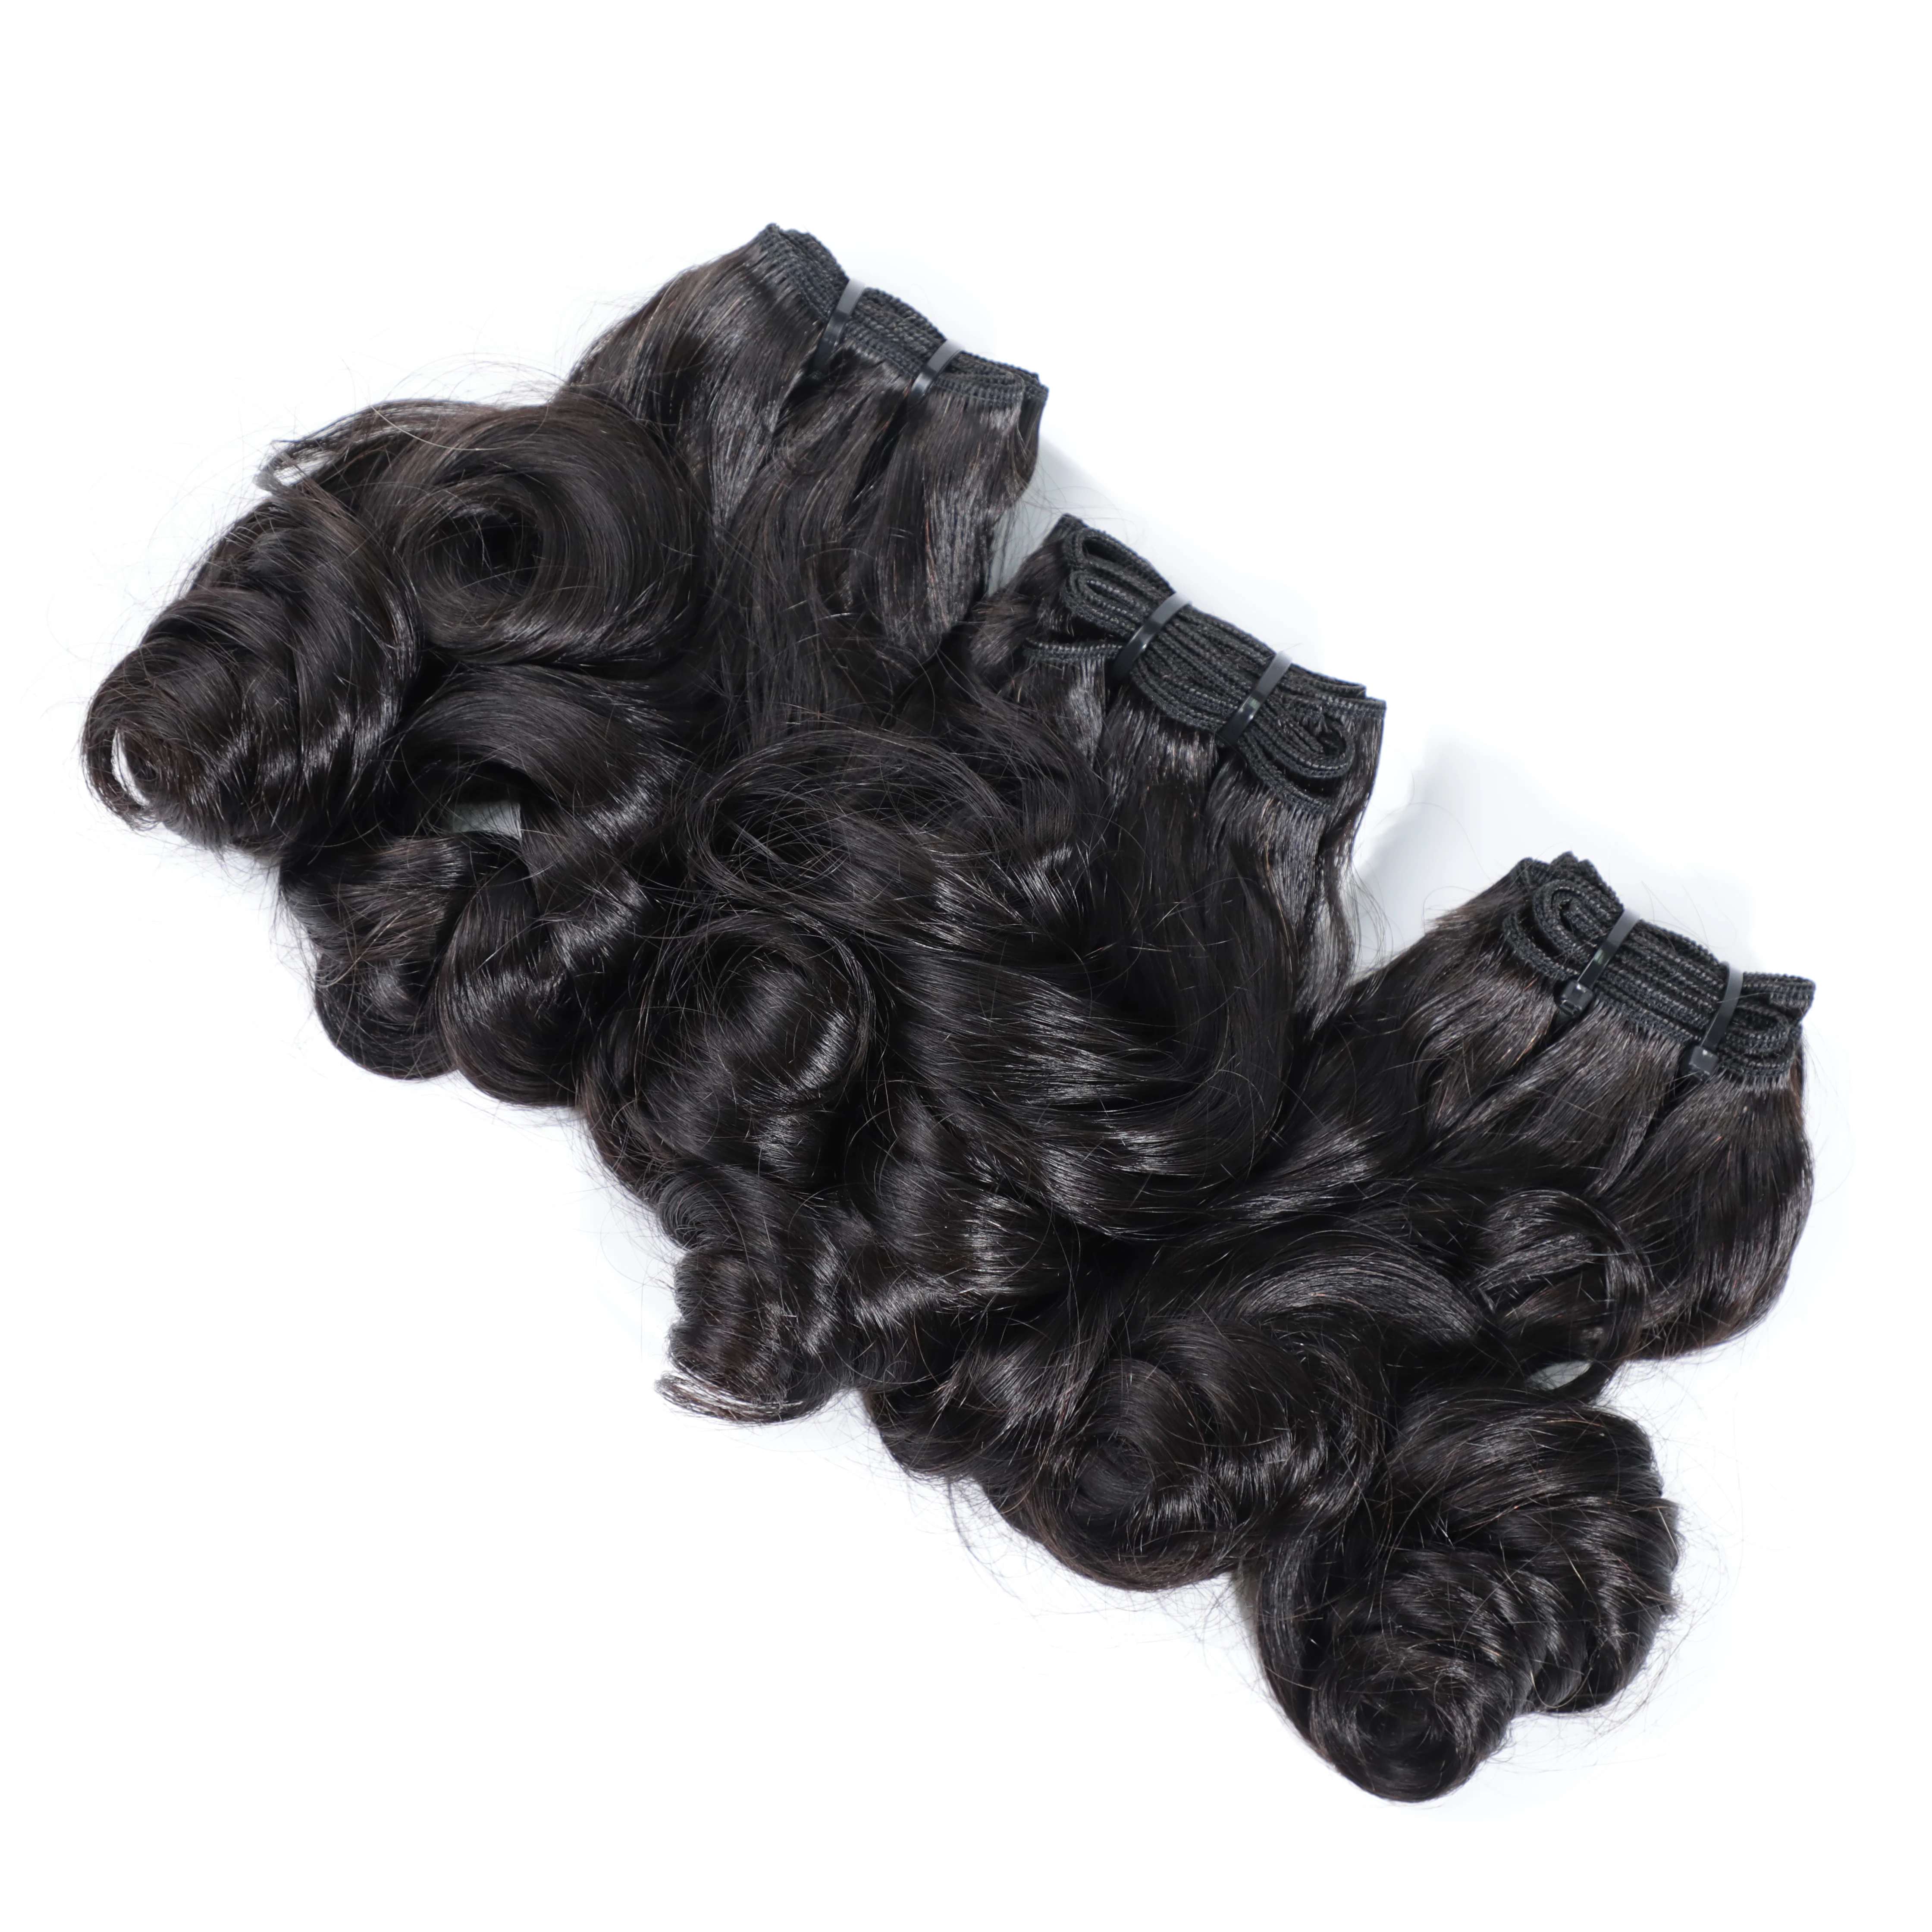 

Hot Beauty Hair 10a 11a 12a Grade Virgin Brazilian Cuticle Aligned Funmi Posh Curl Double Drawn Hair Extensions, #1b natural black, raw virgin hair